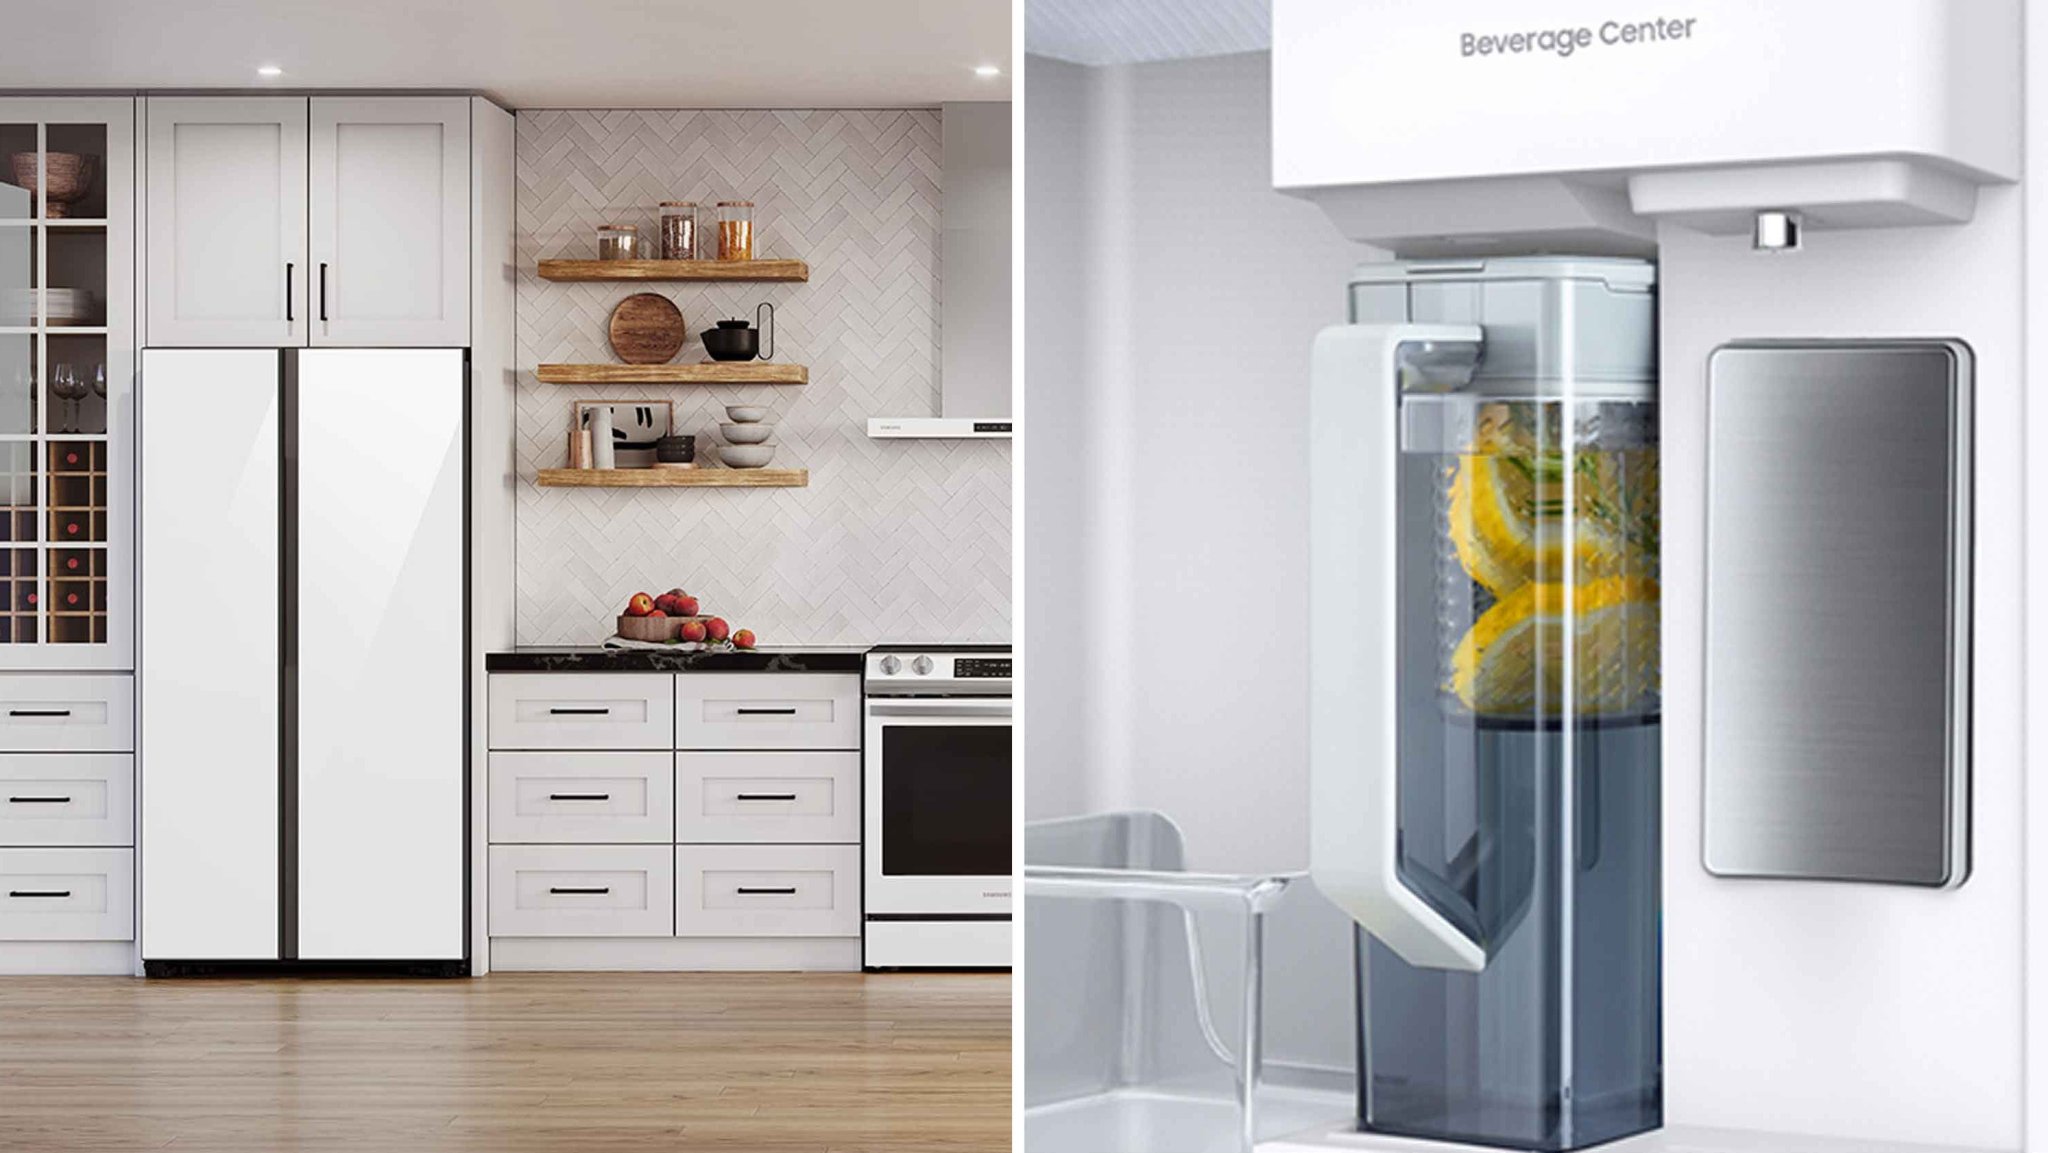 Shop today's best Samsung deals on new customizable Bespoke refrigerators we love